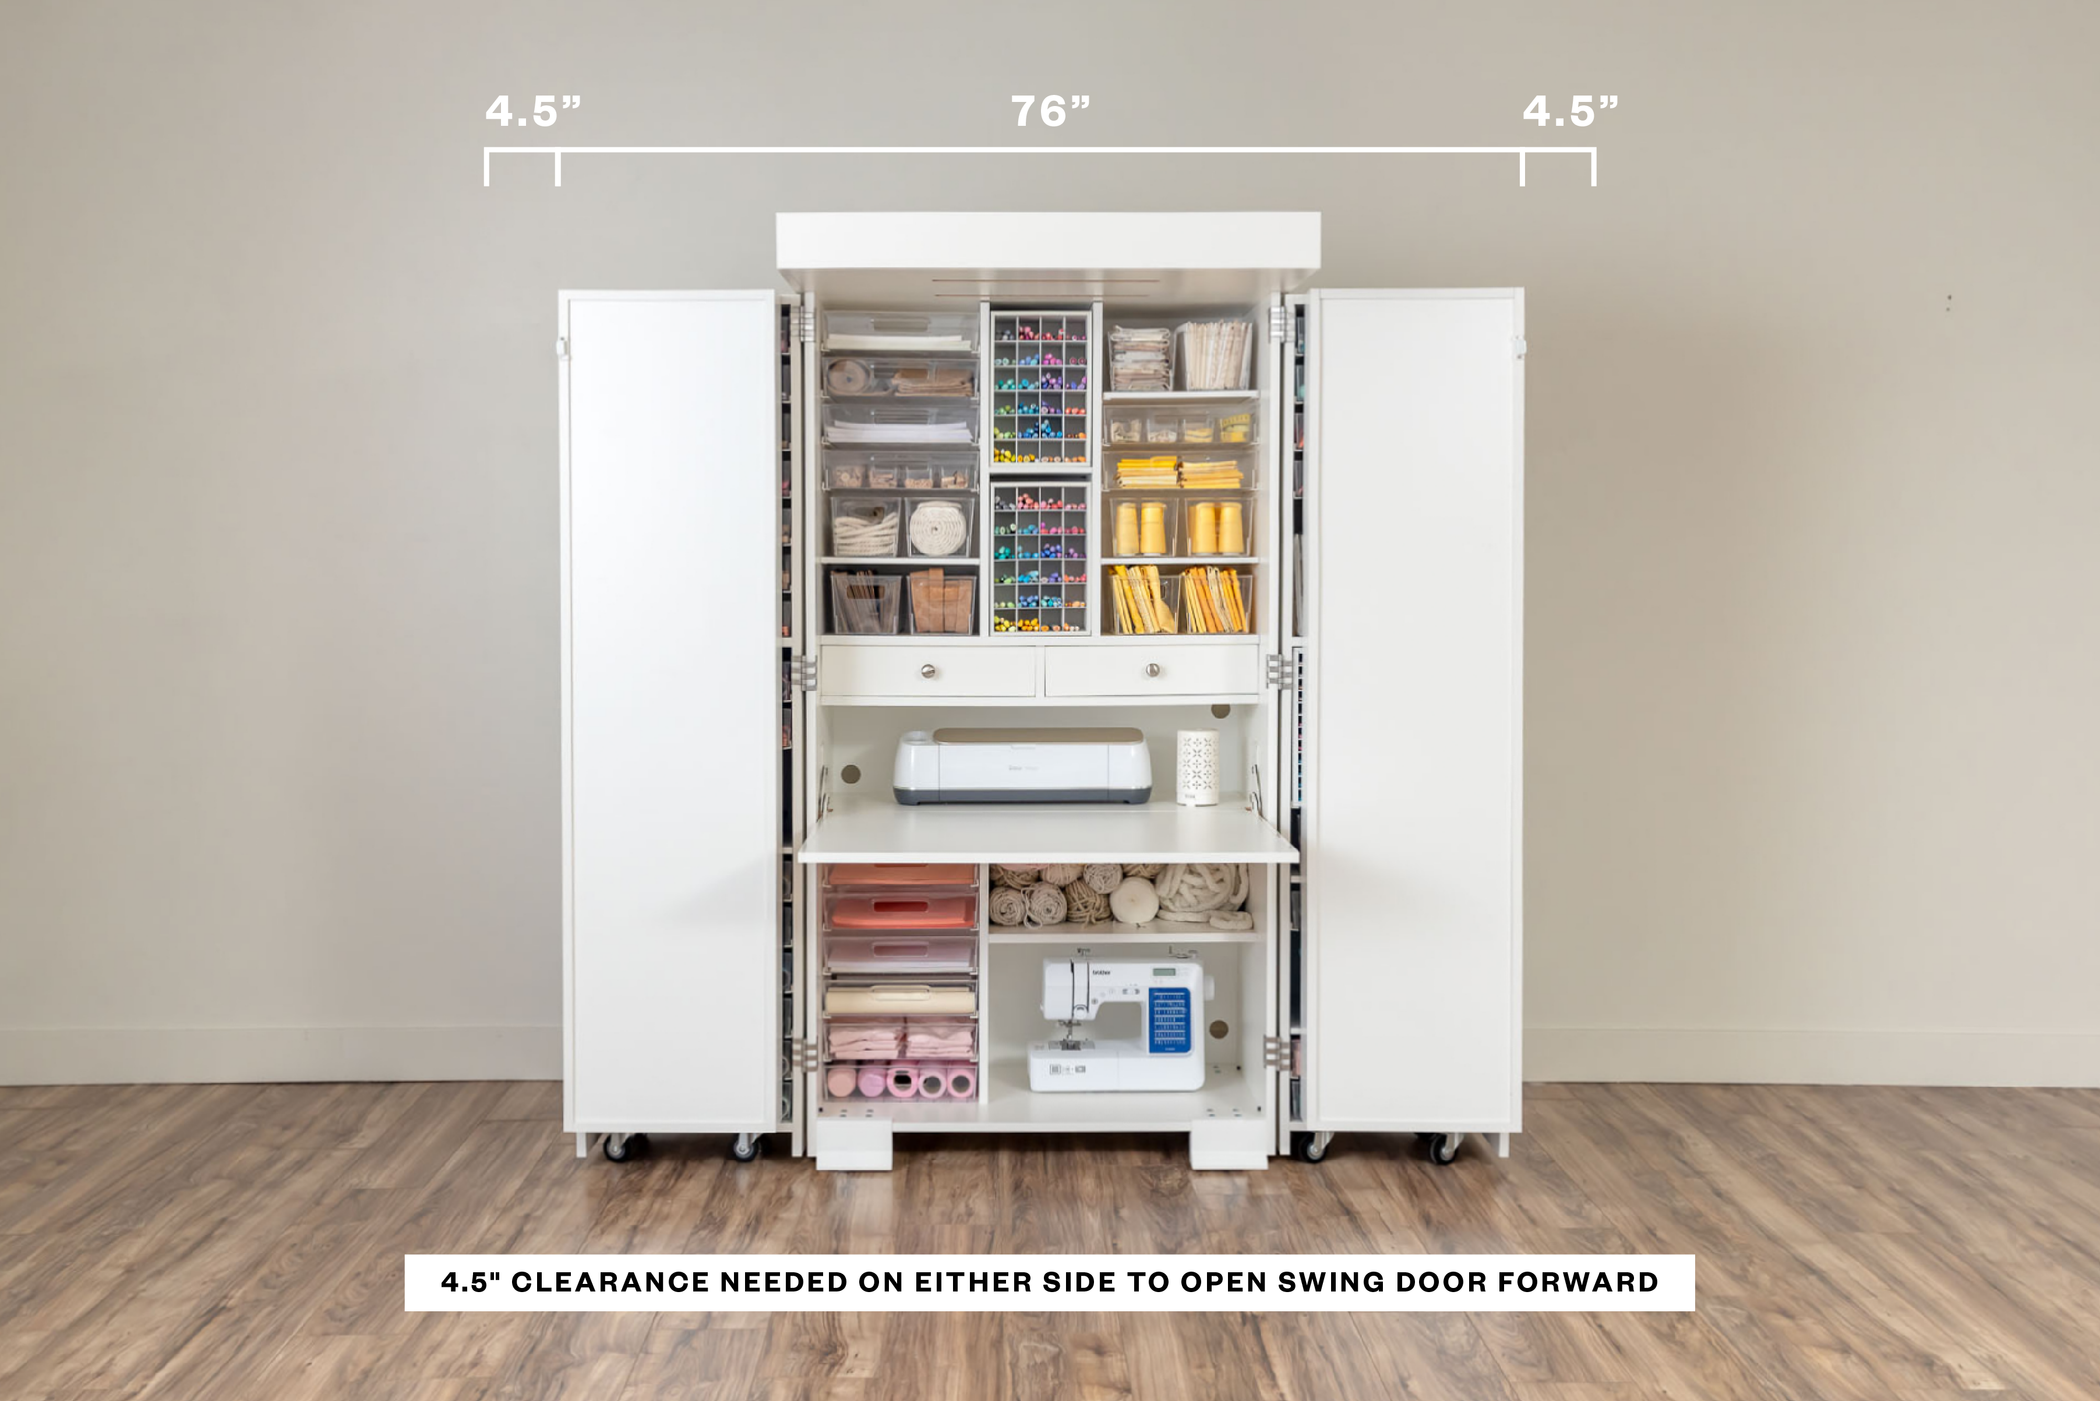 Makers Cabinet: Set Squares by Makers Cabinet — Kickstarter